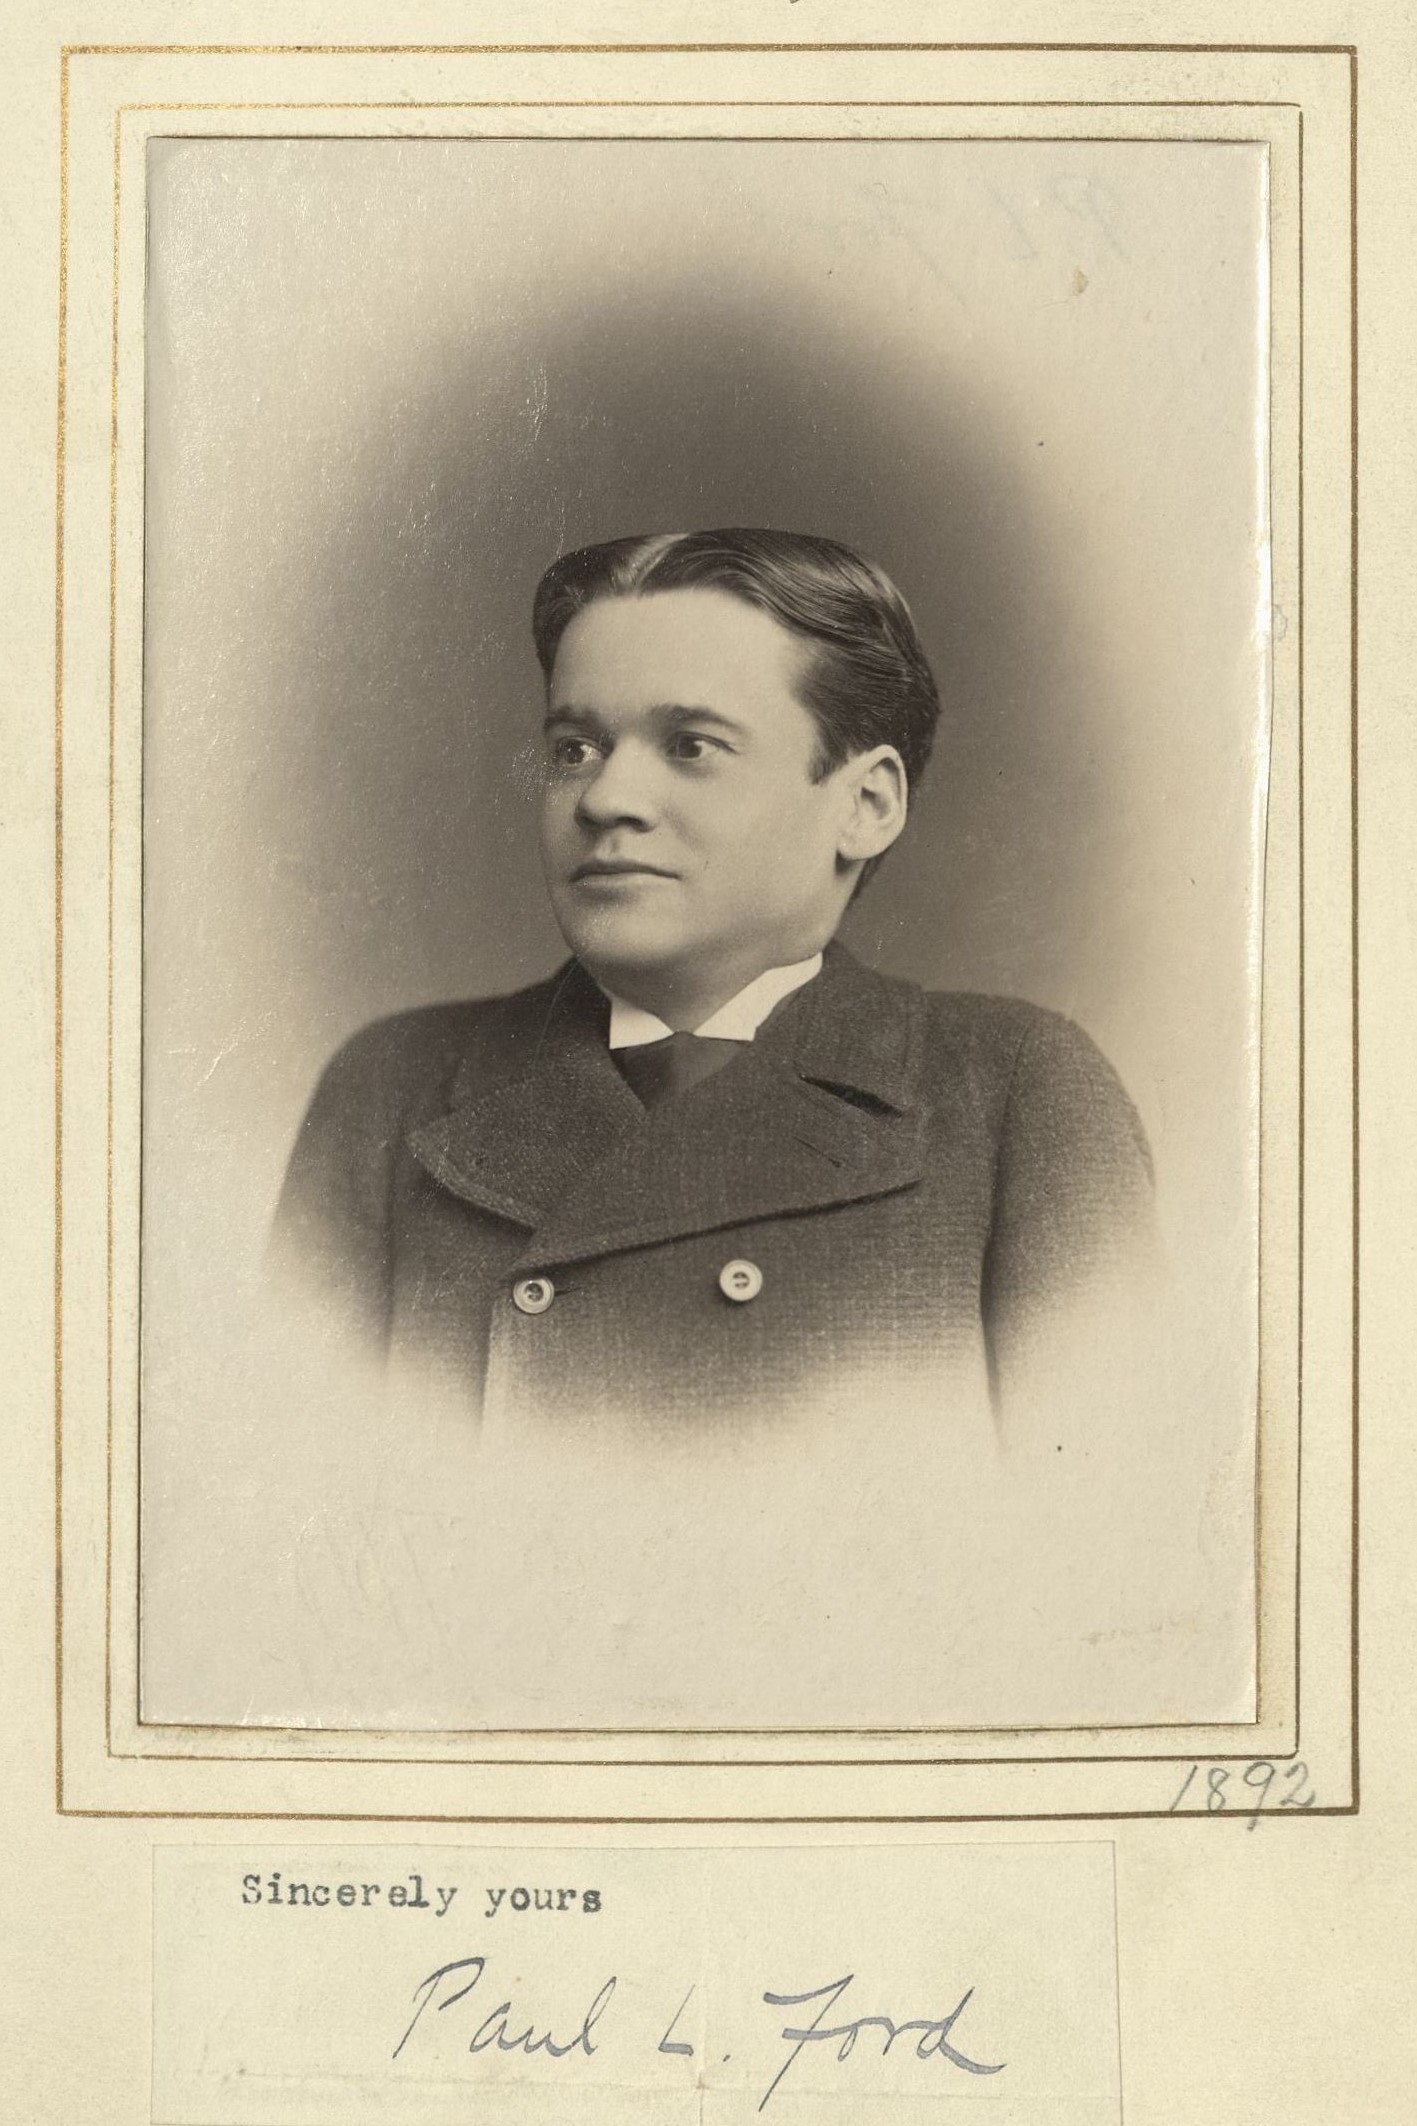 Member portrait of Paul L. Ford